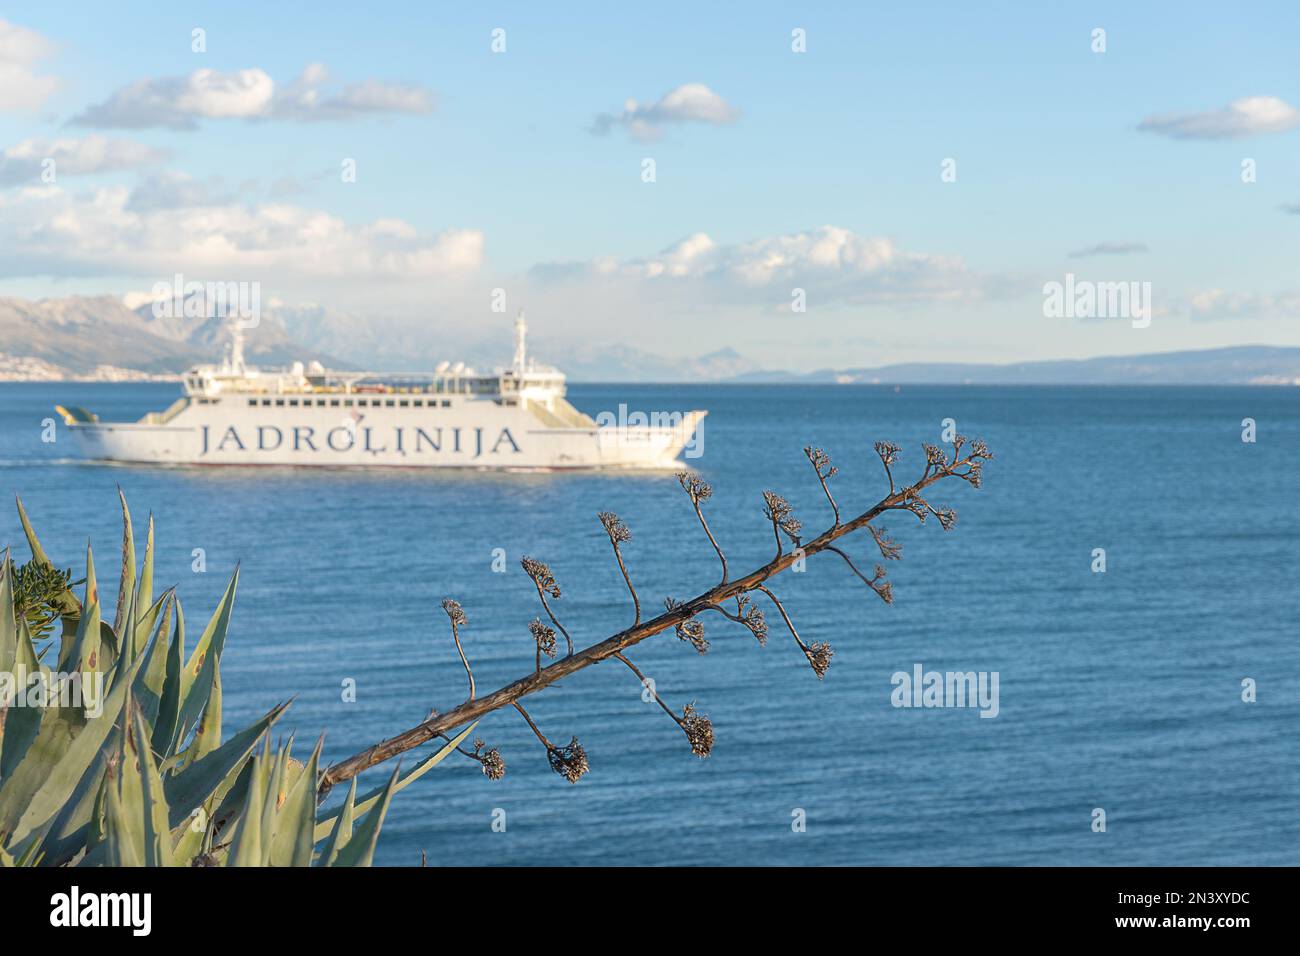 Jadrolinija ferry on the Adriatic sea in Split. Sunset in Croatia. Stock Photo